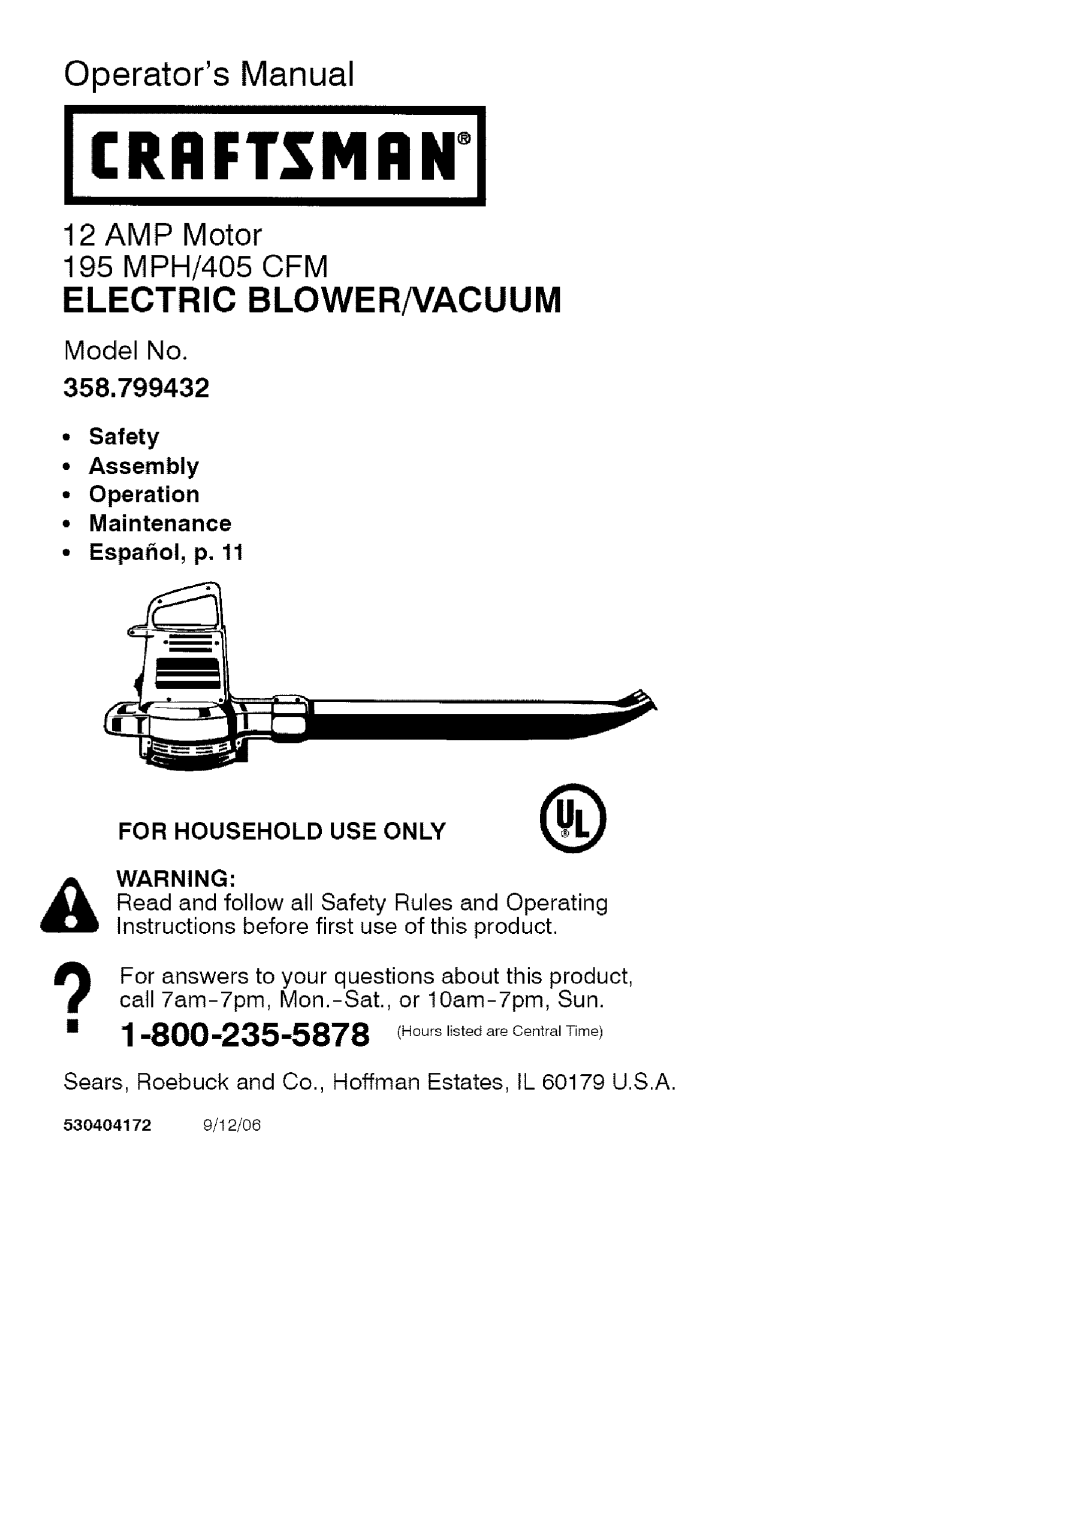 Craftsman 358.799432 manual ICRRFT$1VlRNI, Operators Manual, Electric Blowernacuum, Safety Assembly Operation Maintenance 